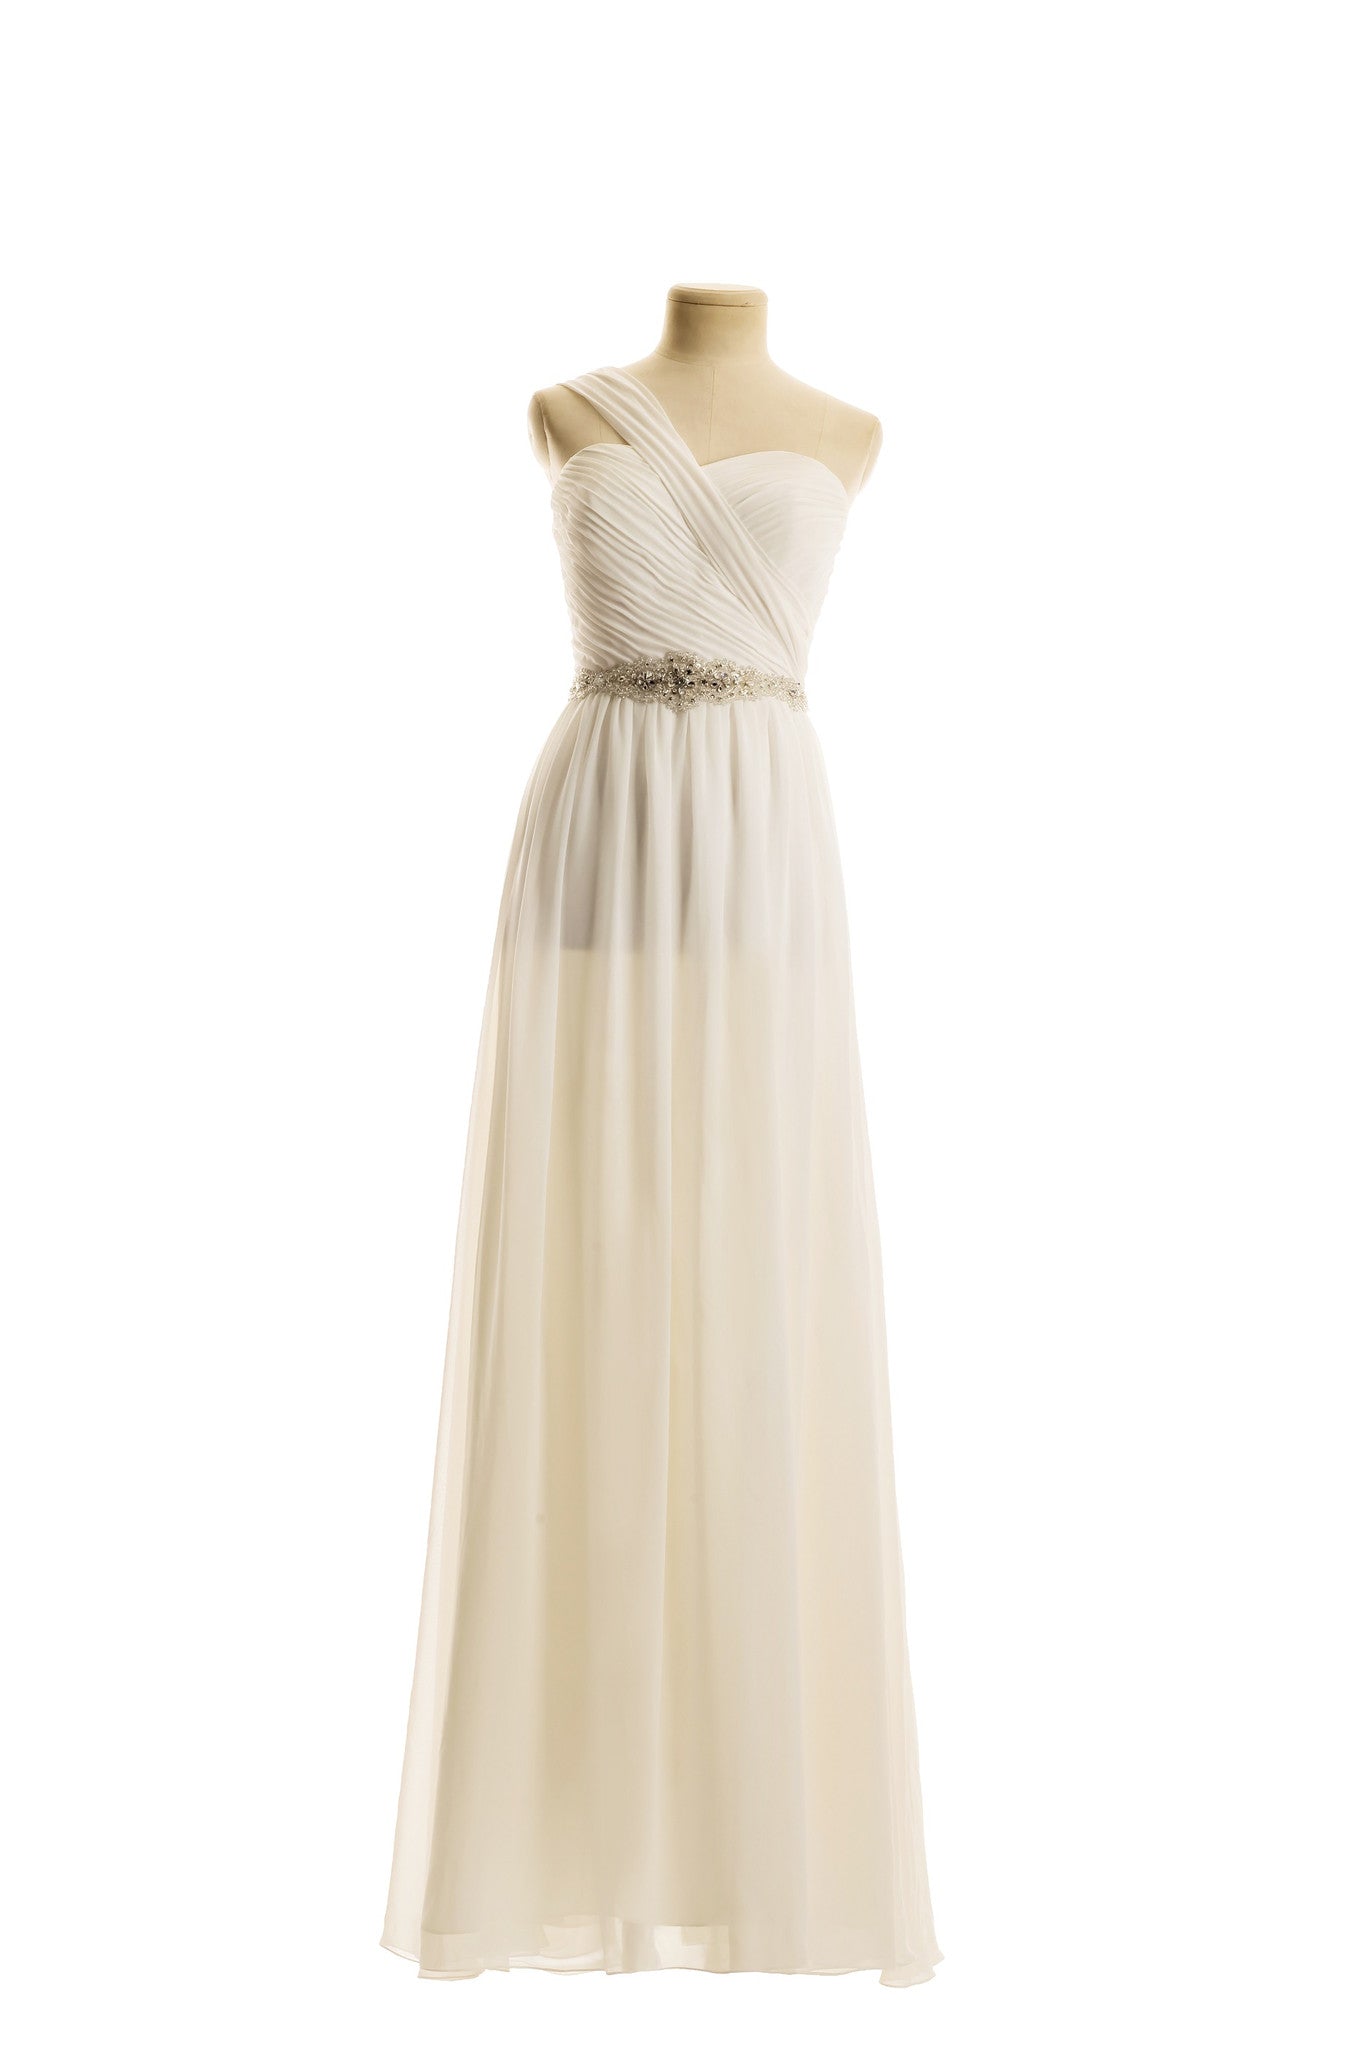 Grecian style Lakin wedding dress sample from lm bridal very light uk 10-12